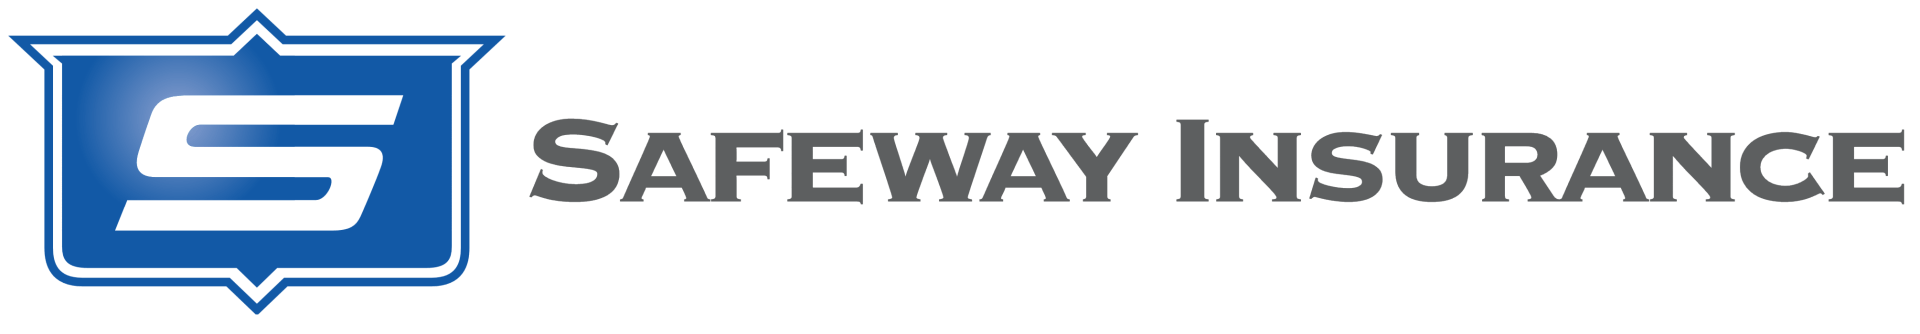 Safeway Insurance